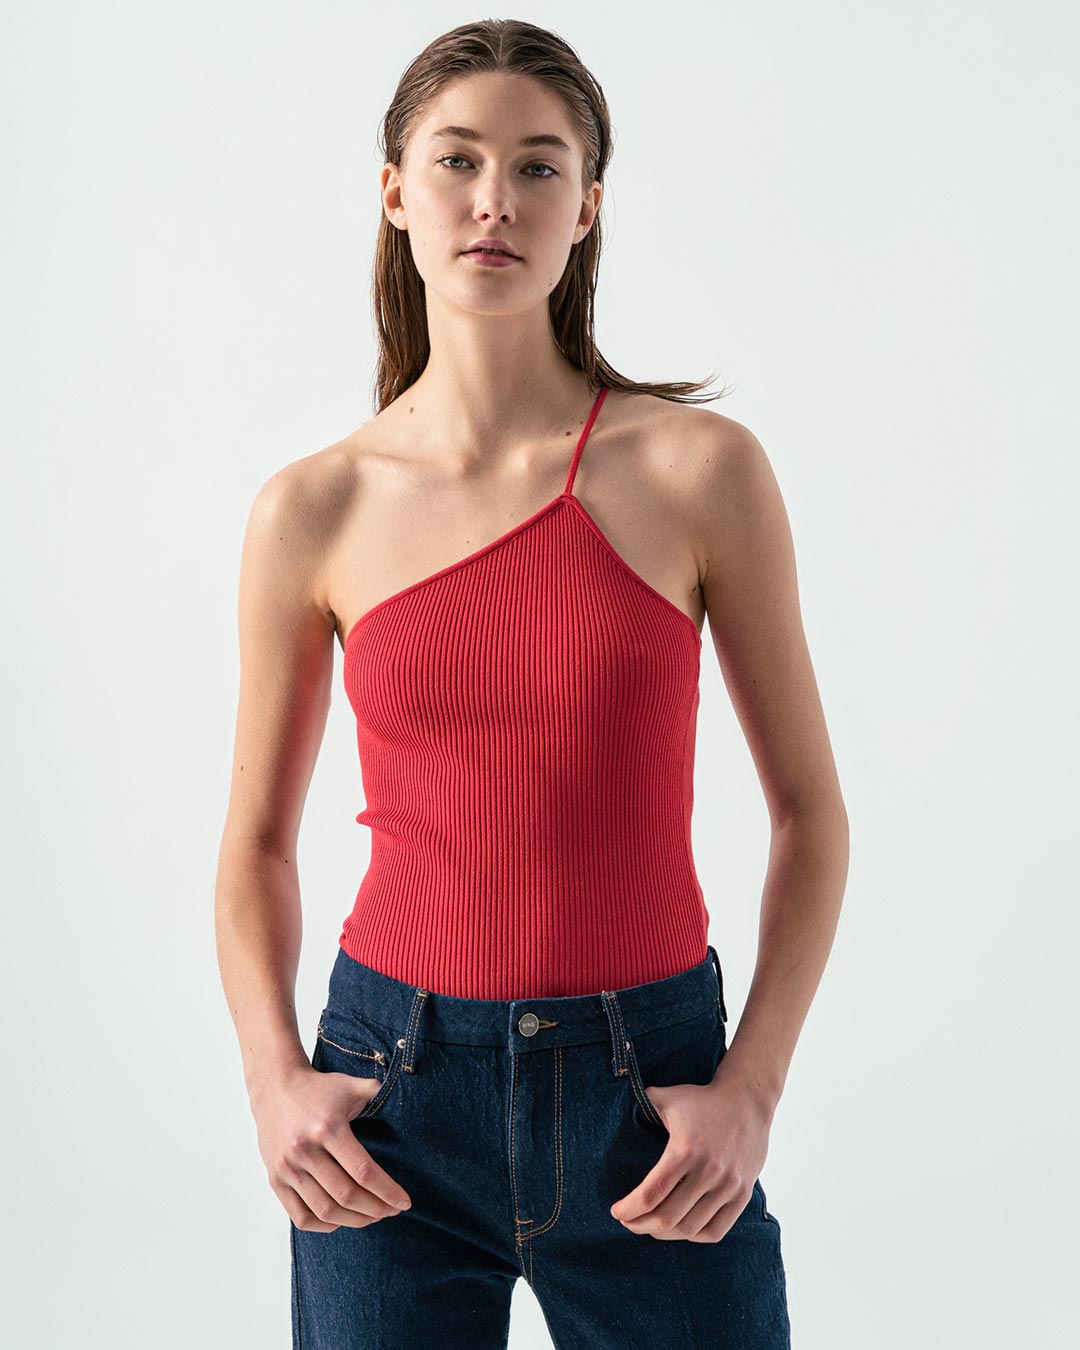 Tailor Made Knitwear TM6107 Rib shoulderless ράντα – Red